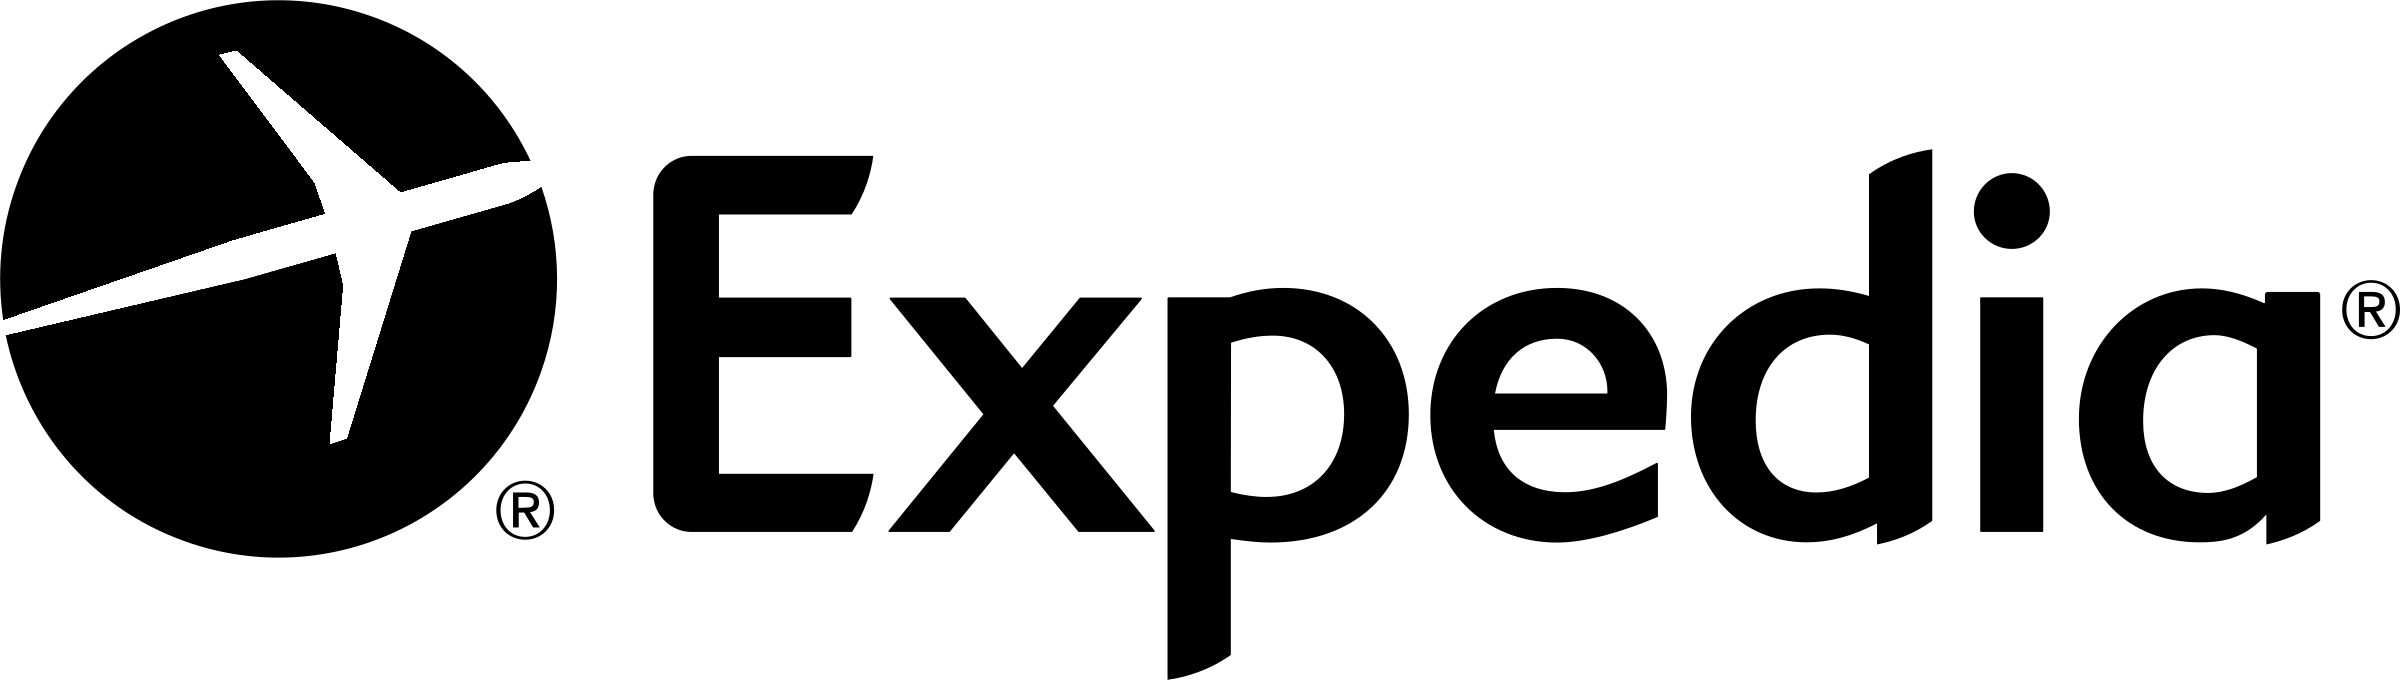 Expedia Black and White logo